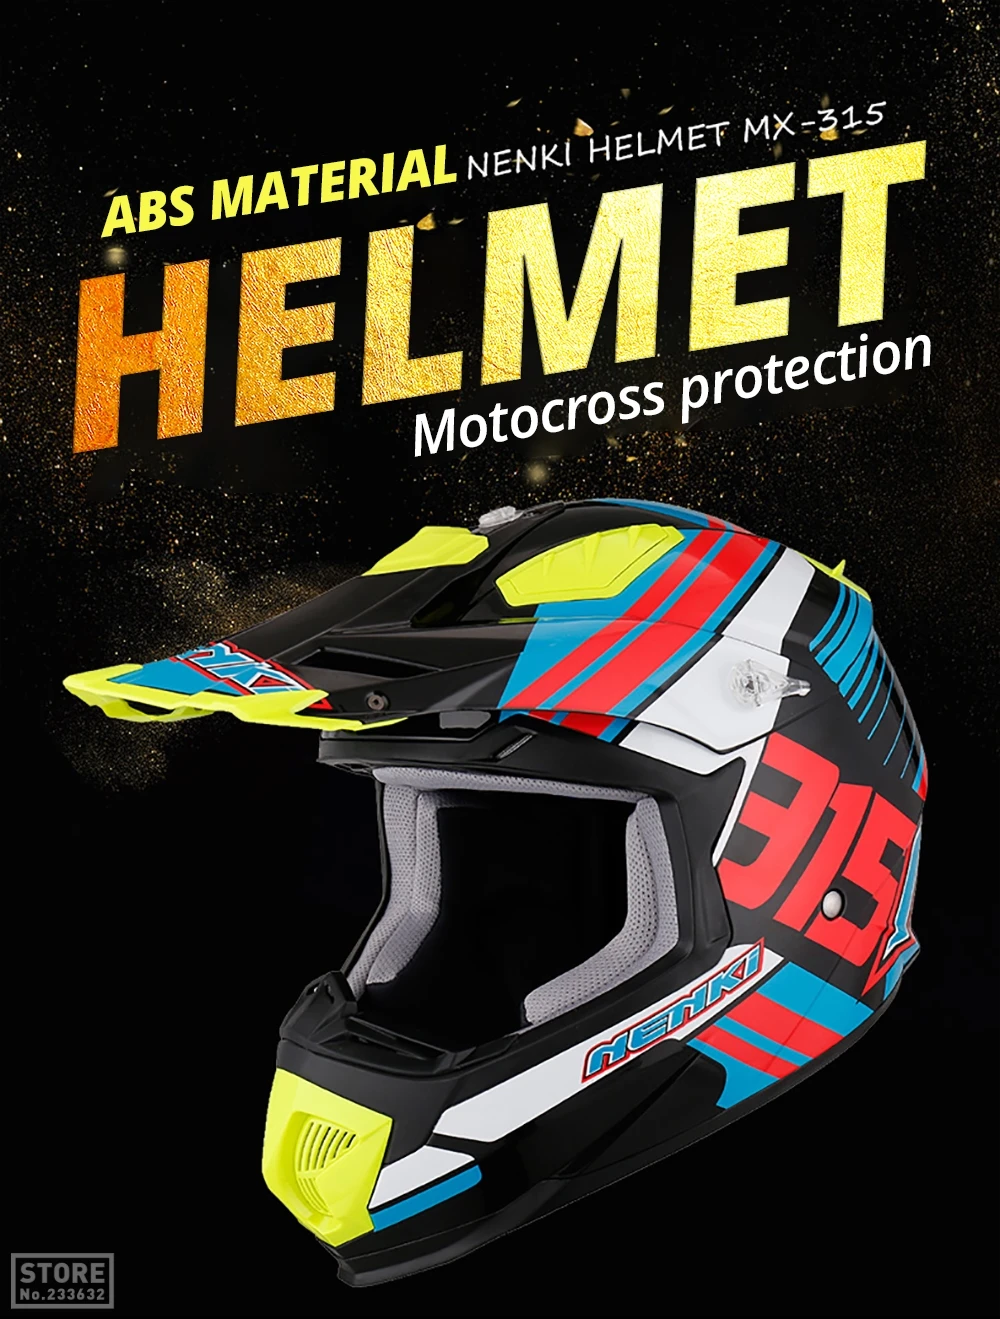 NENKI шлем для мотокросса мотоциклетный шлем для мотокросса внедорожный мотоциклетный шлем для верховой езды Casco Moto ECE Сертификация